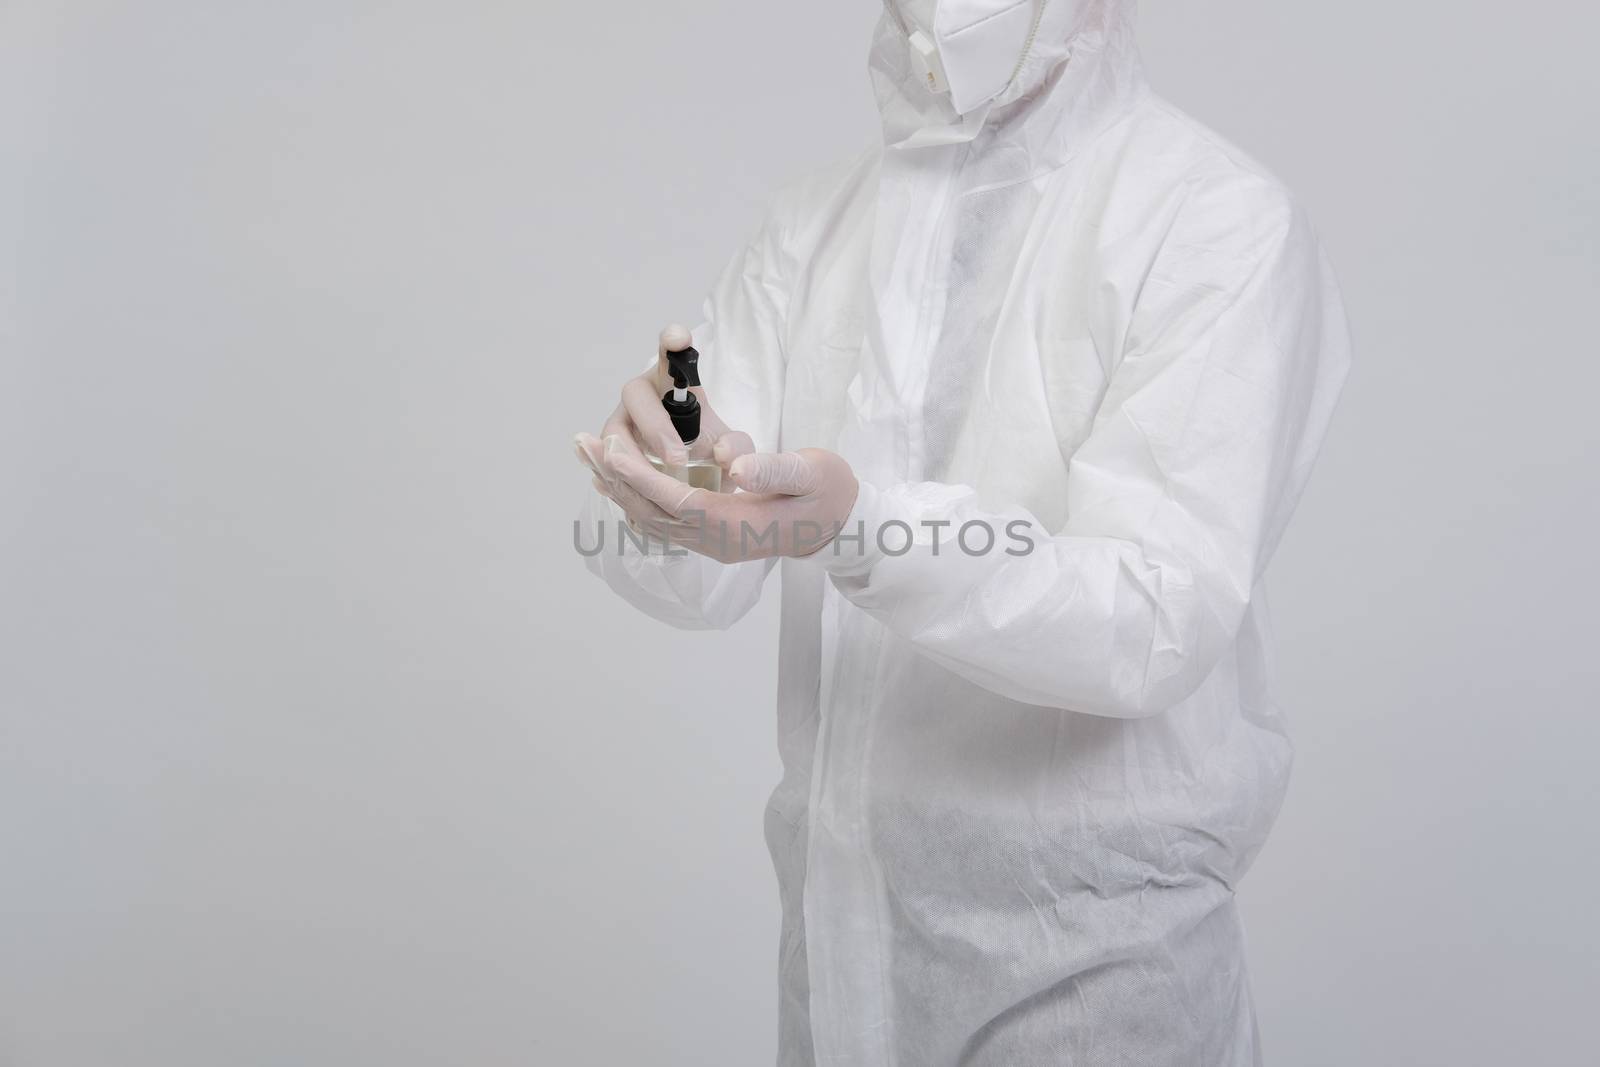 man doctor wearing biological protective uniform suit clothing, mask, gloves washing hand with sanitizer dispenser for sanitizing virus bacteria